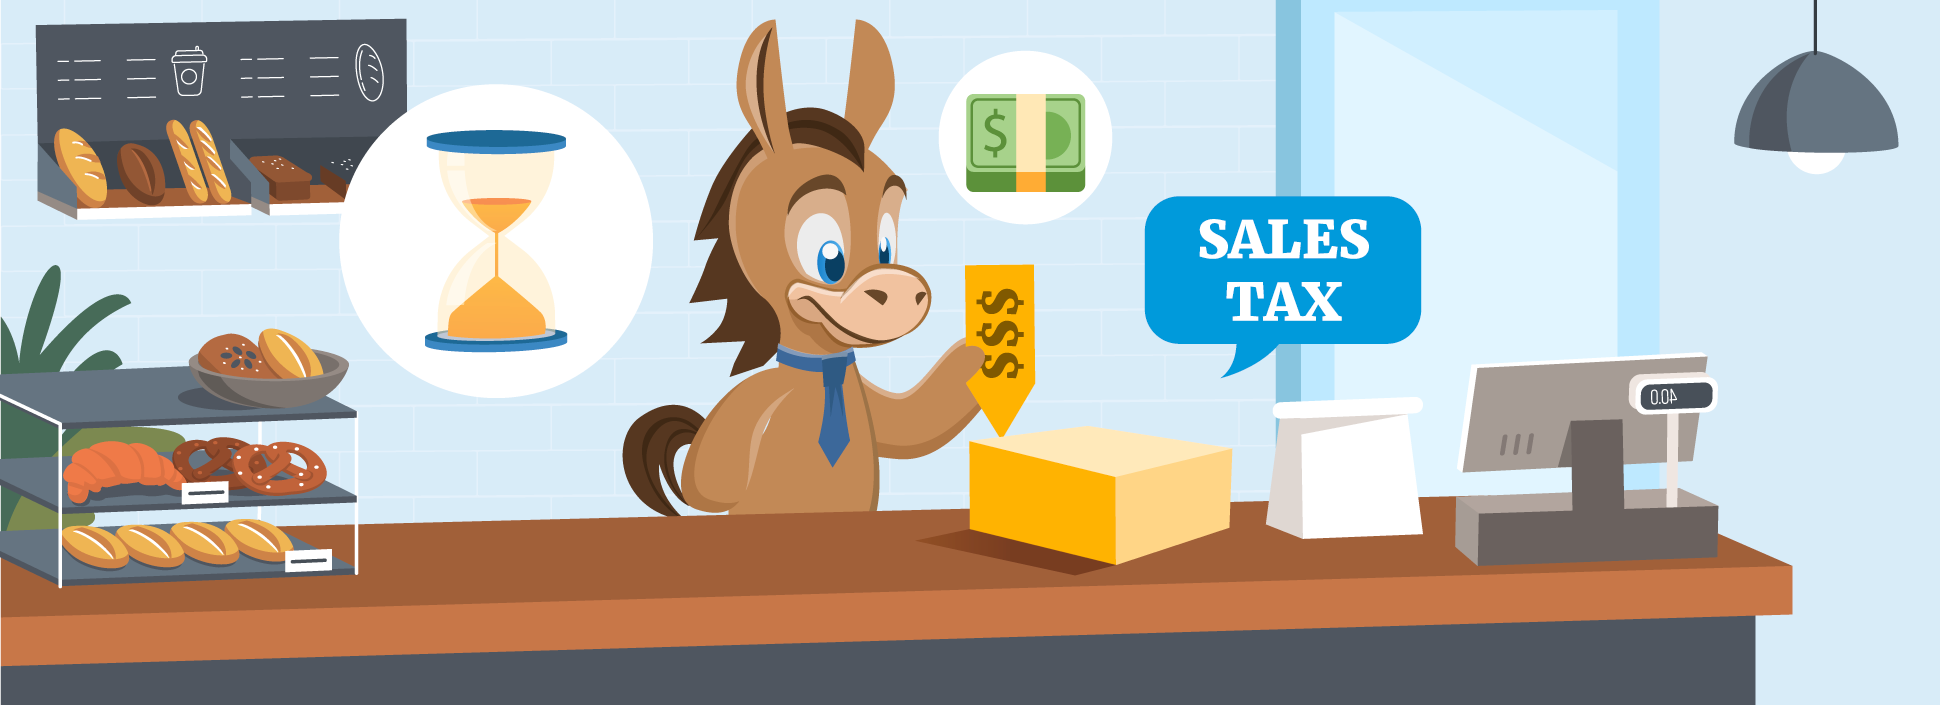 Illustration of a sales tax calculator